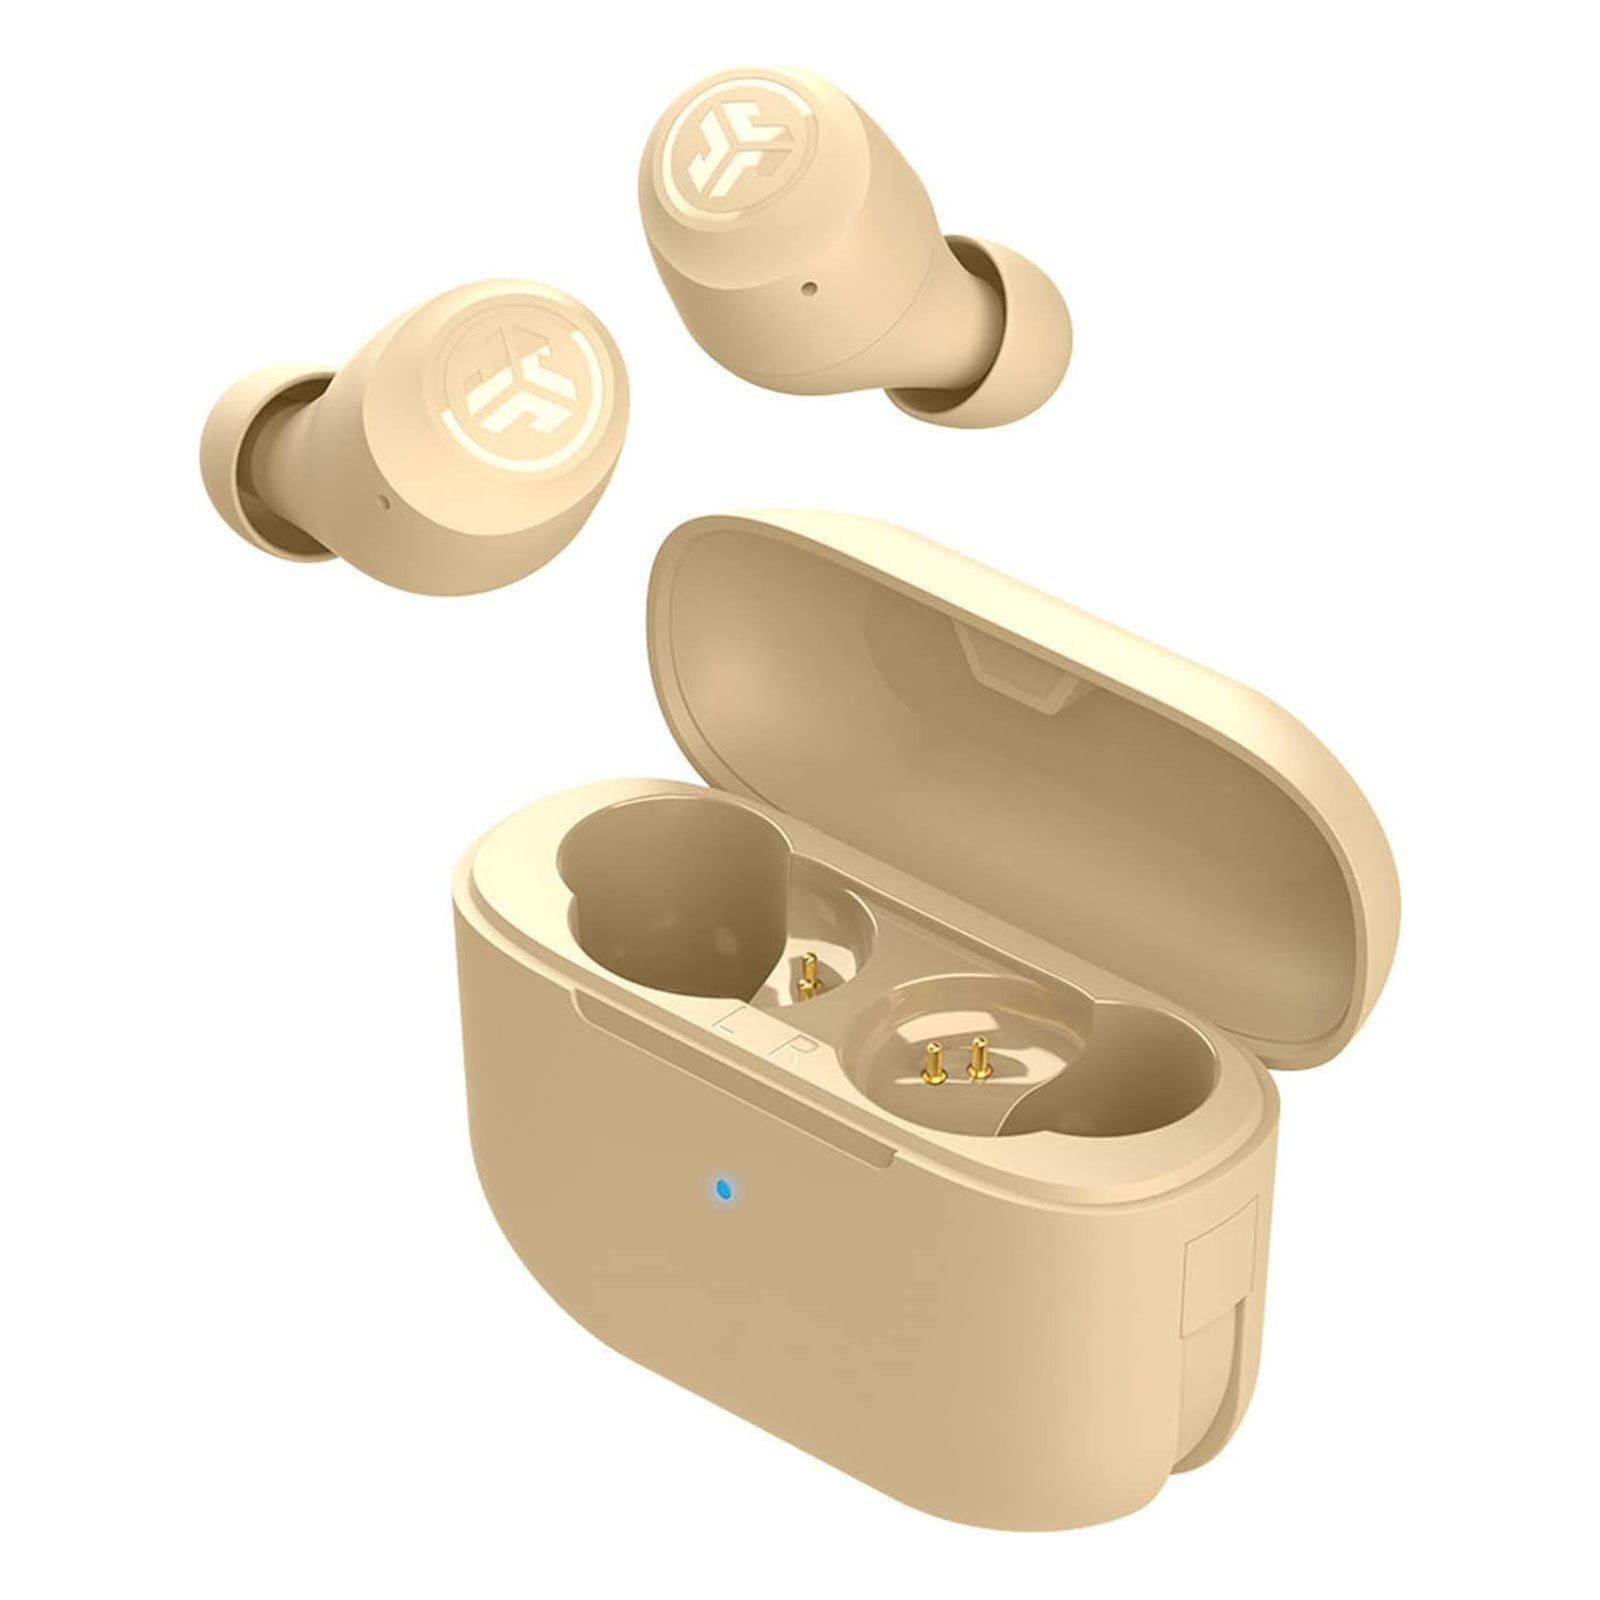 Jlab Go 155 Tones Air Wireless Touch, (TWS, Pantone Hauttöne) True Bluetooth, USB-Ladecase, In-Ear-Kopfhörer EQ3-Sound, Earbuds